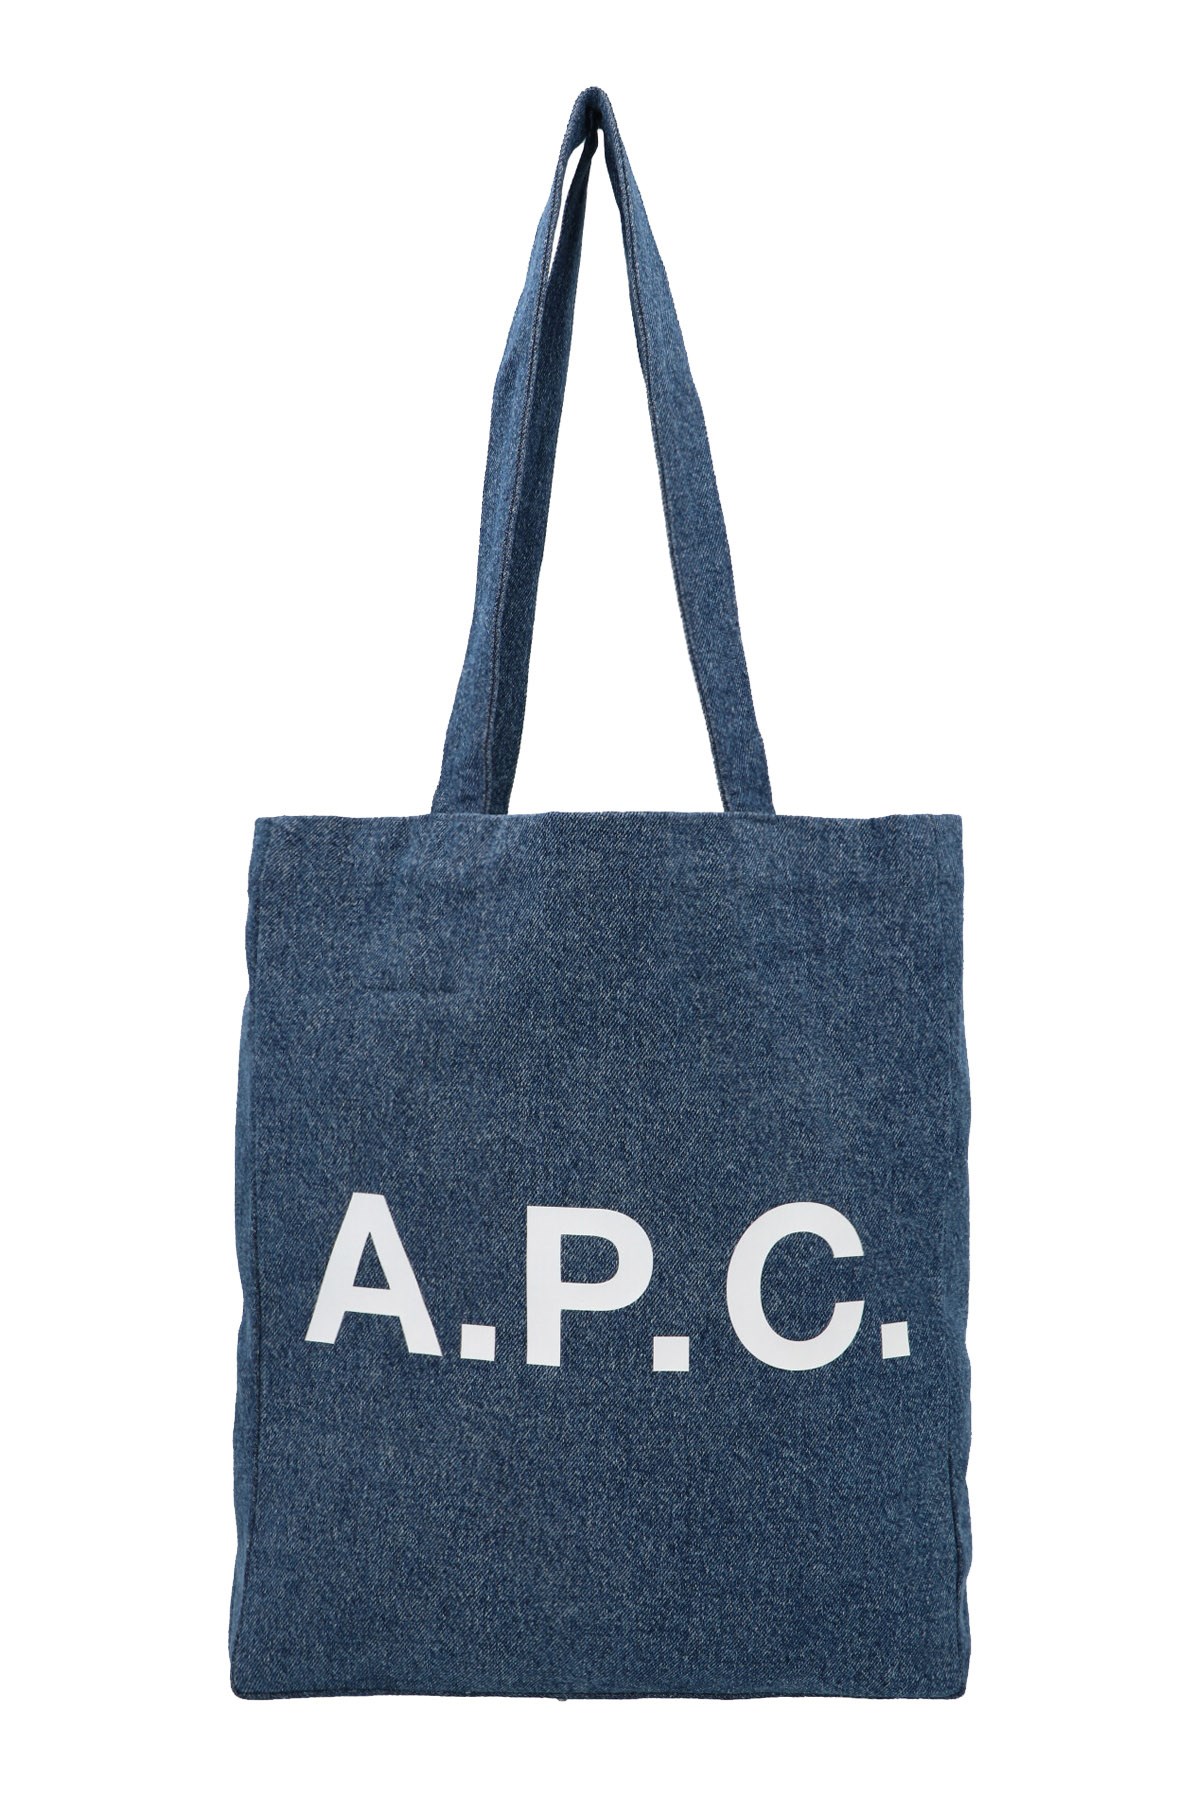 A.P.C. 'Lou’ Shopping Bag